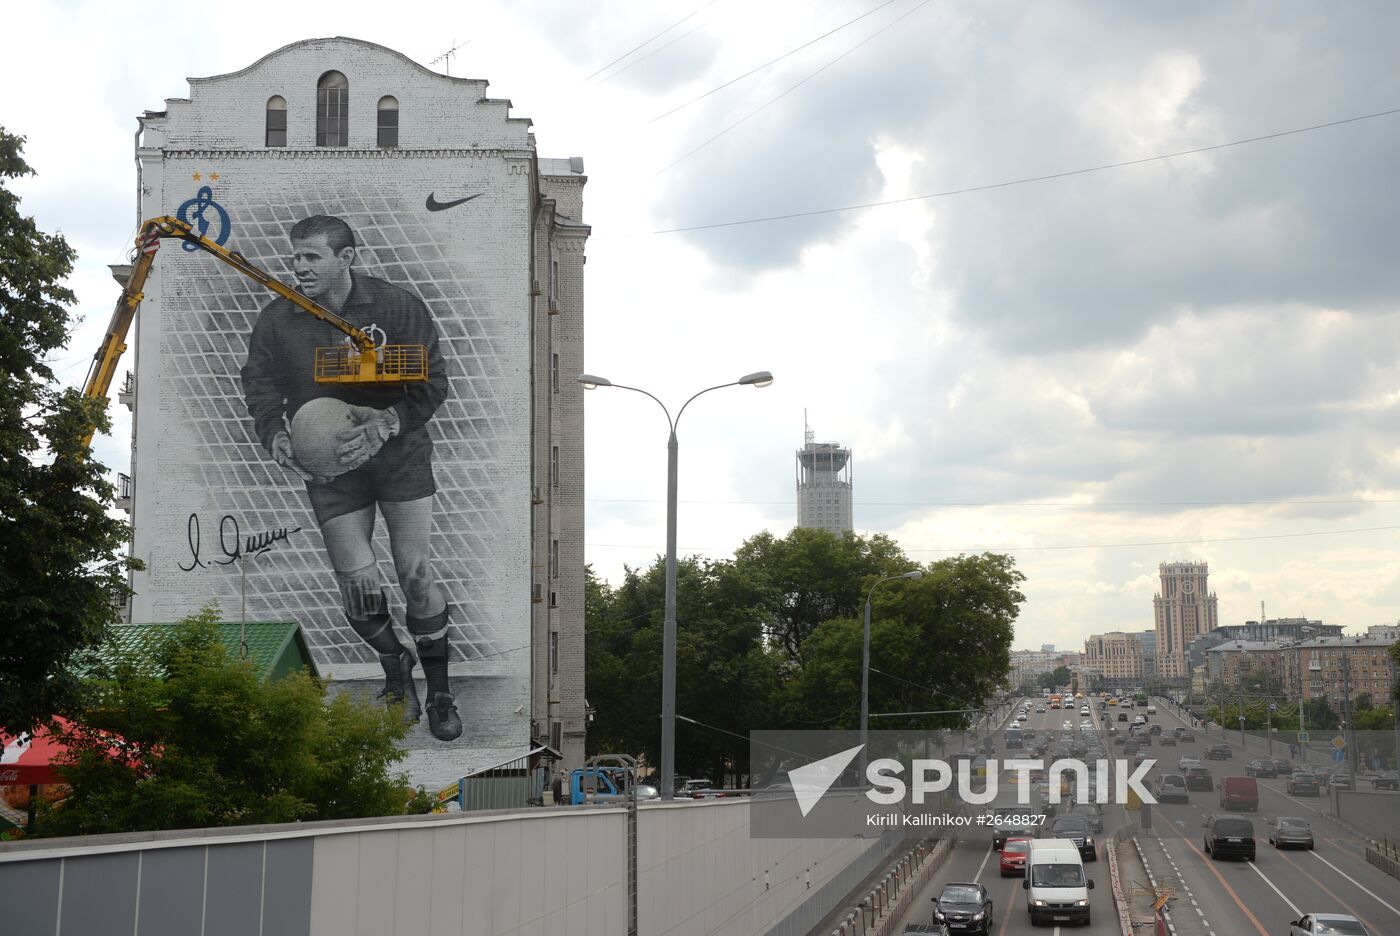 Graffiti portraying goalie Lev Yashin